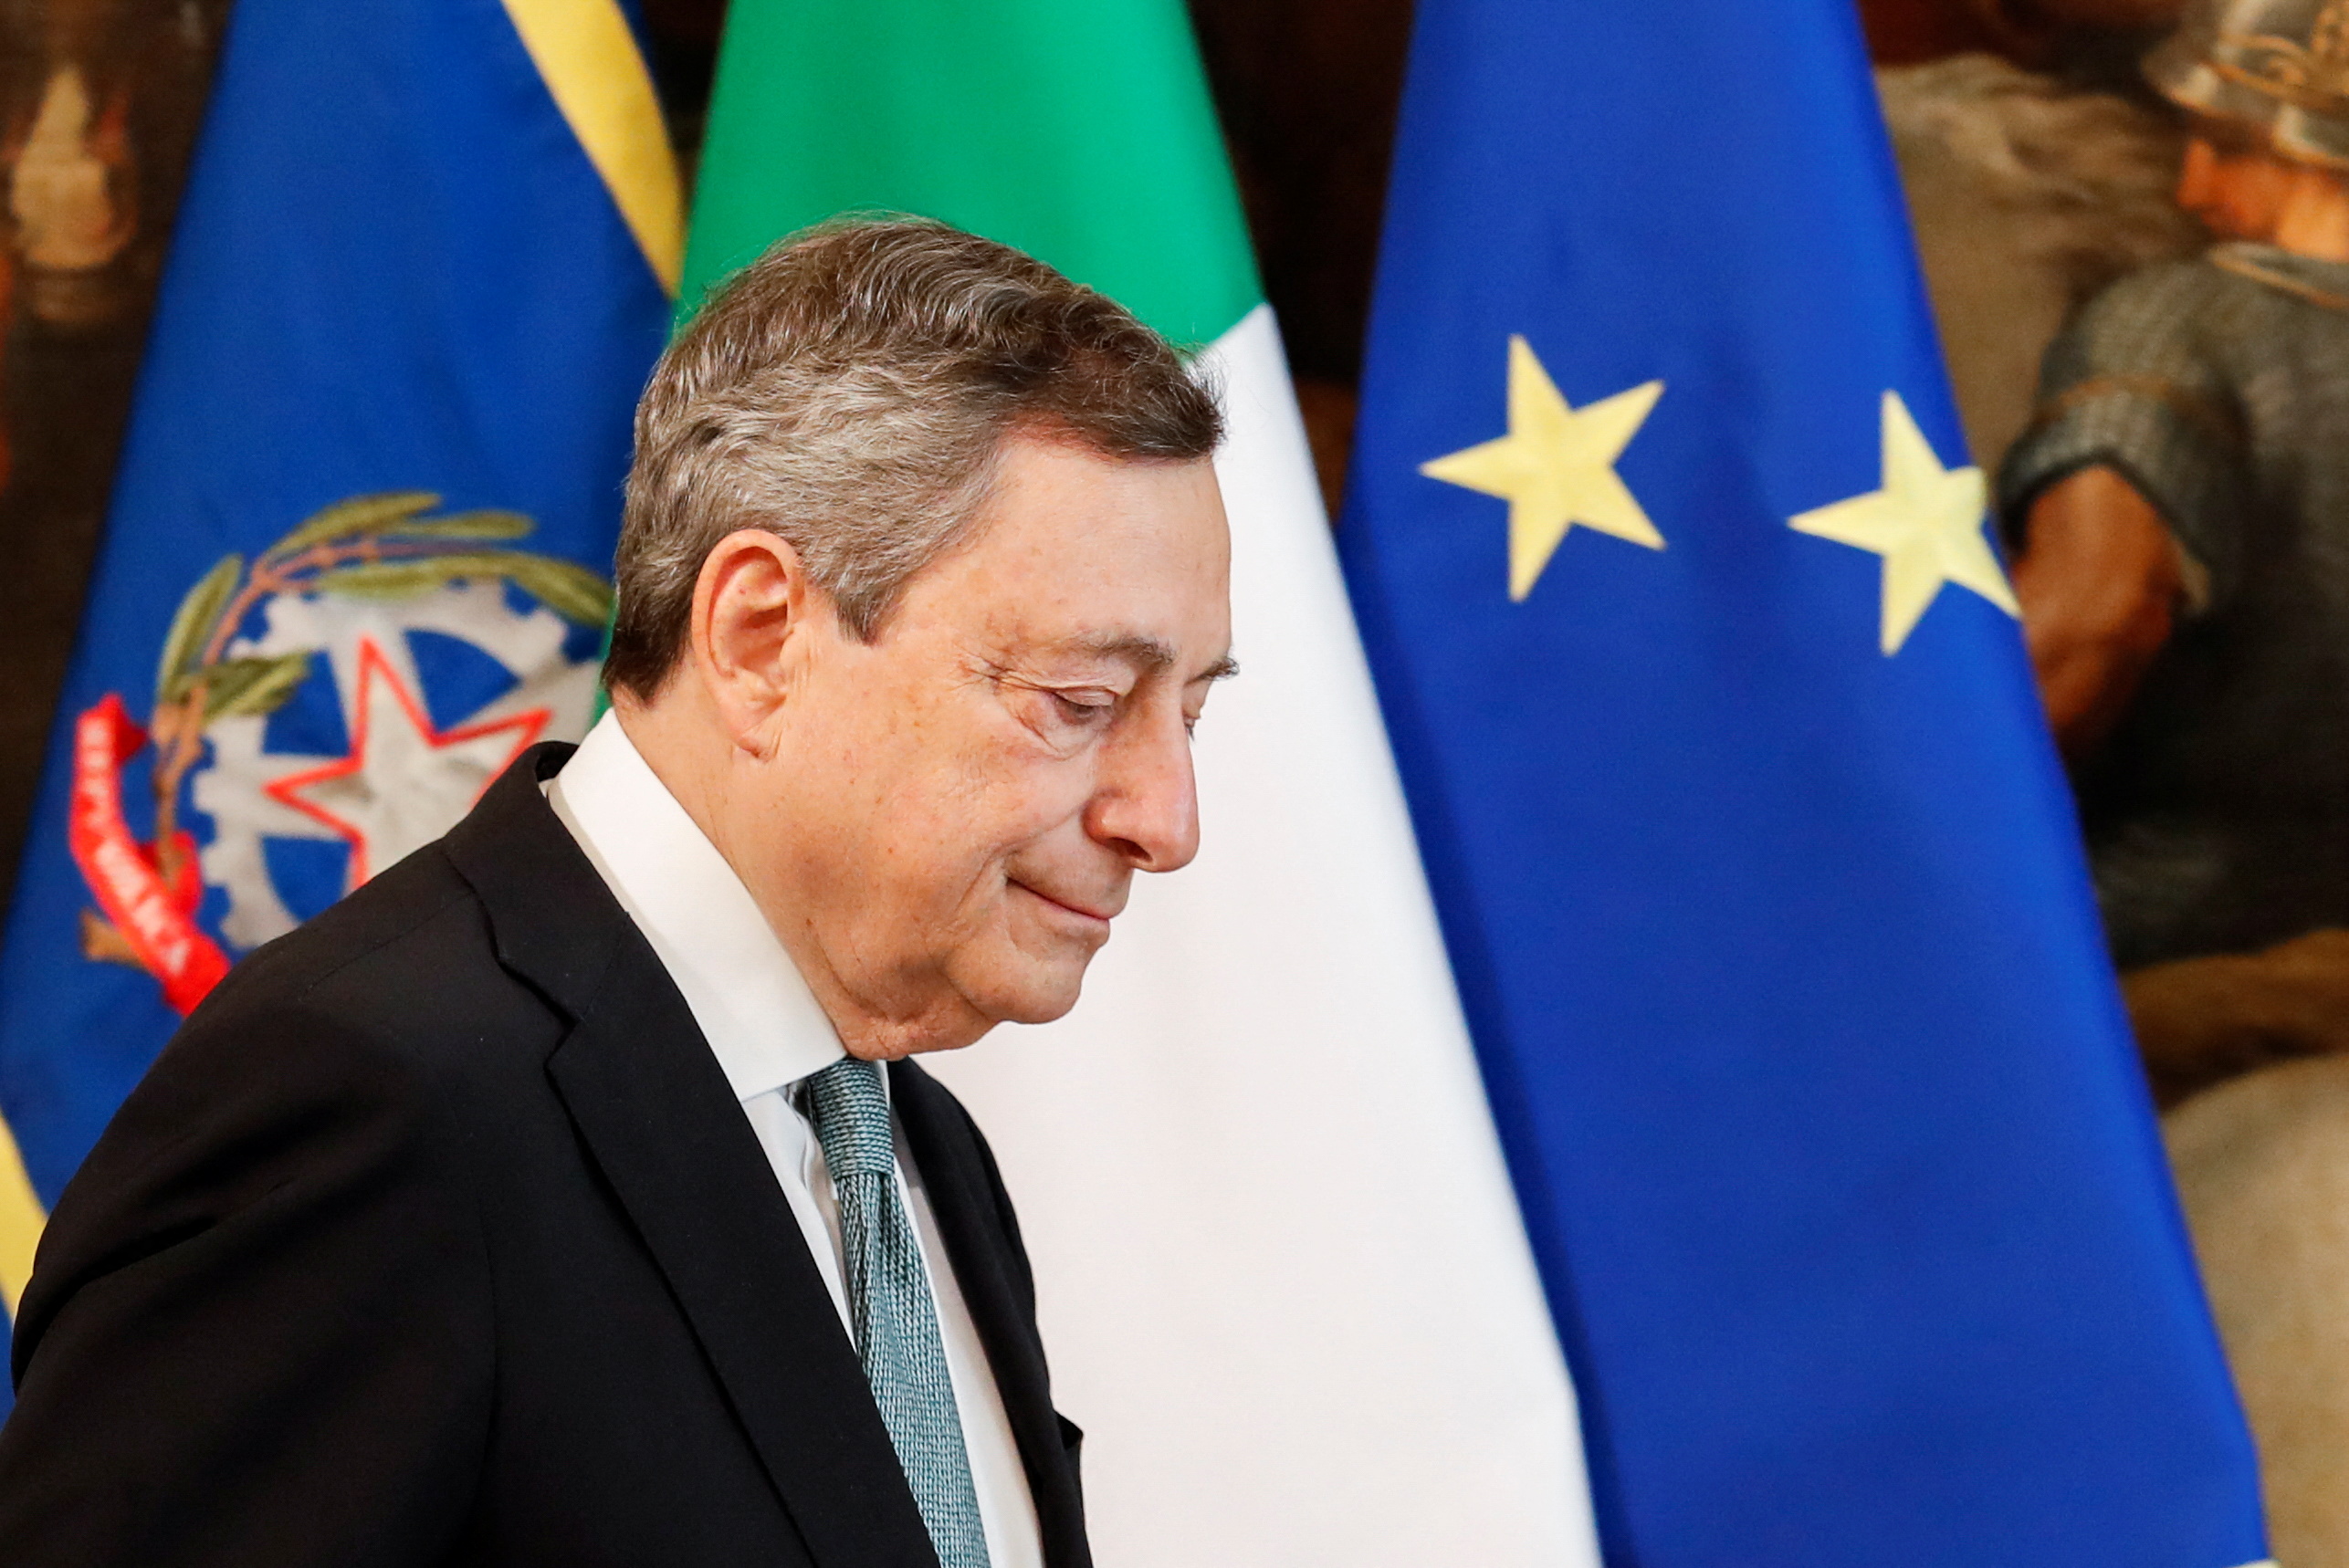 Italian Prime Minister Mario Draghi makes a statement on the Ukraine crisis, in Rome